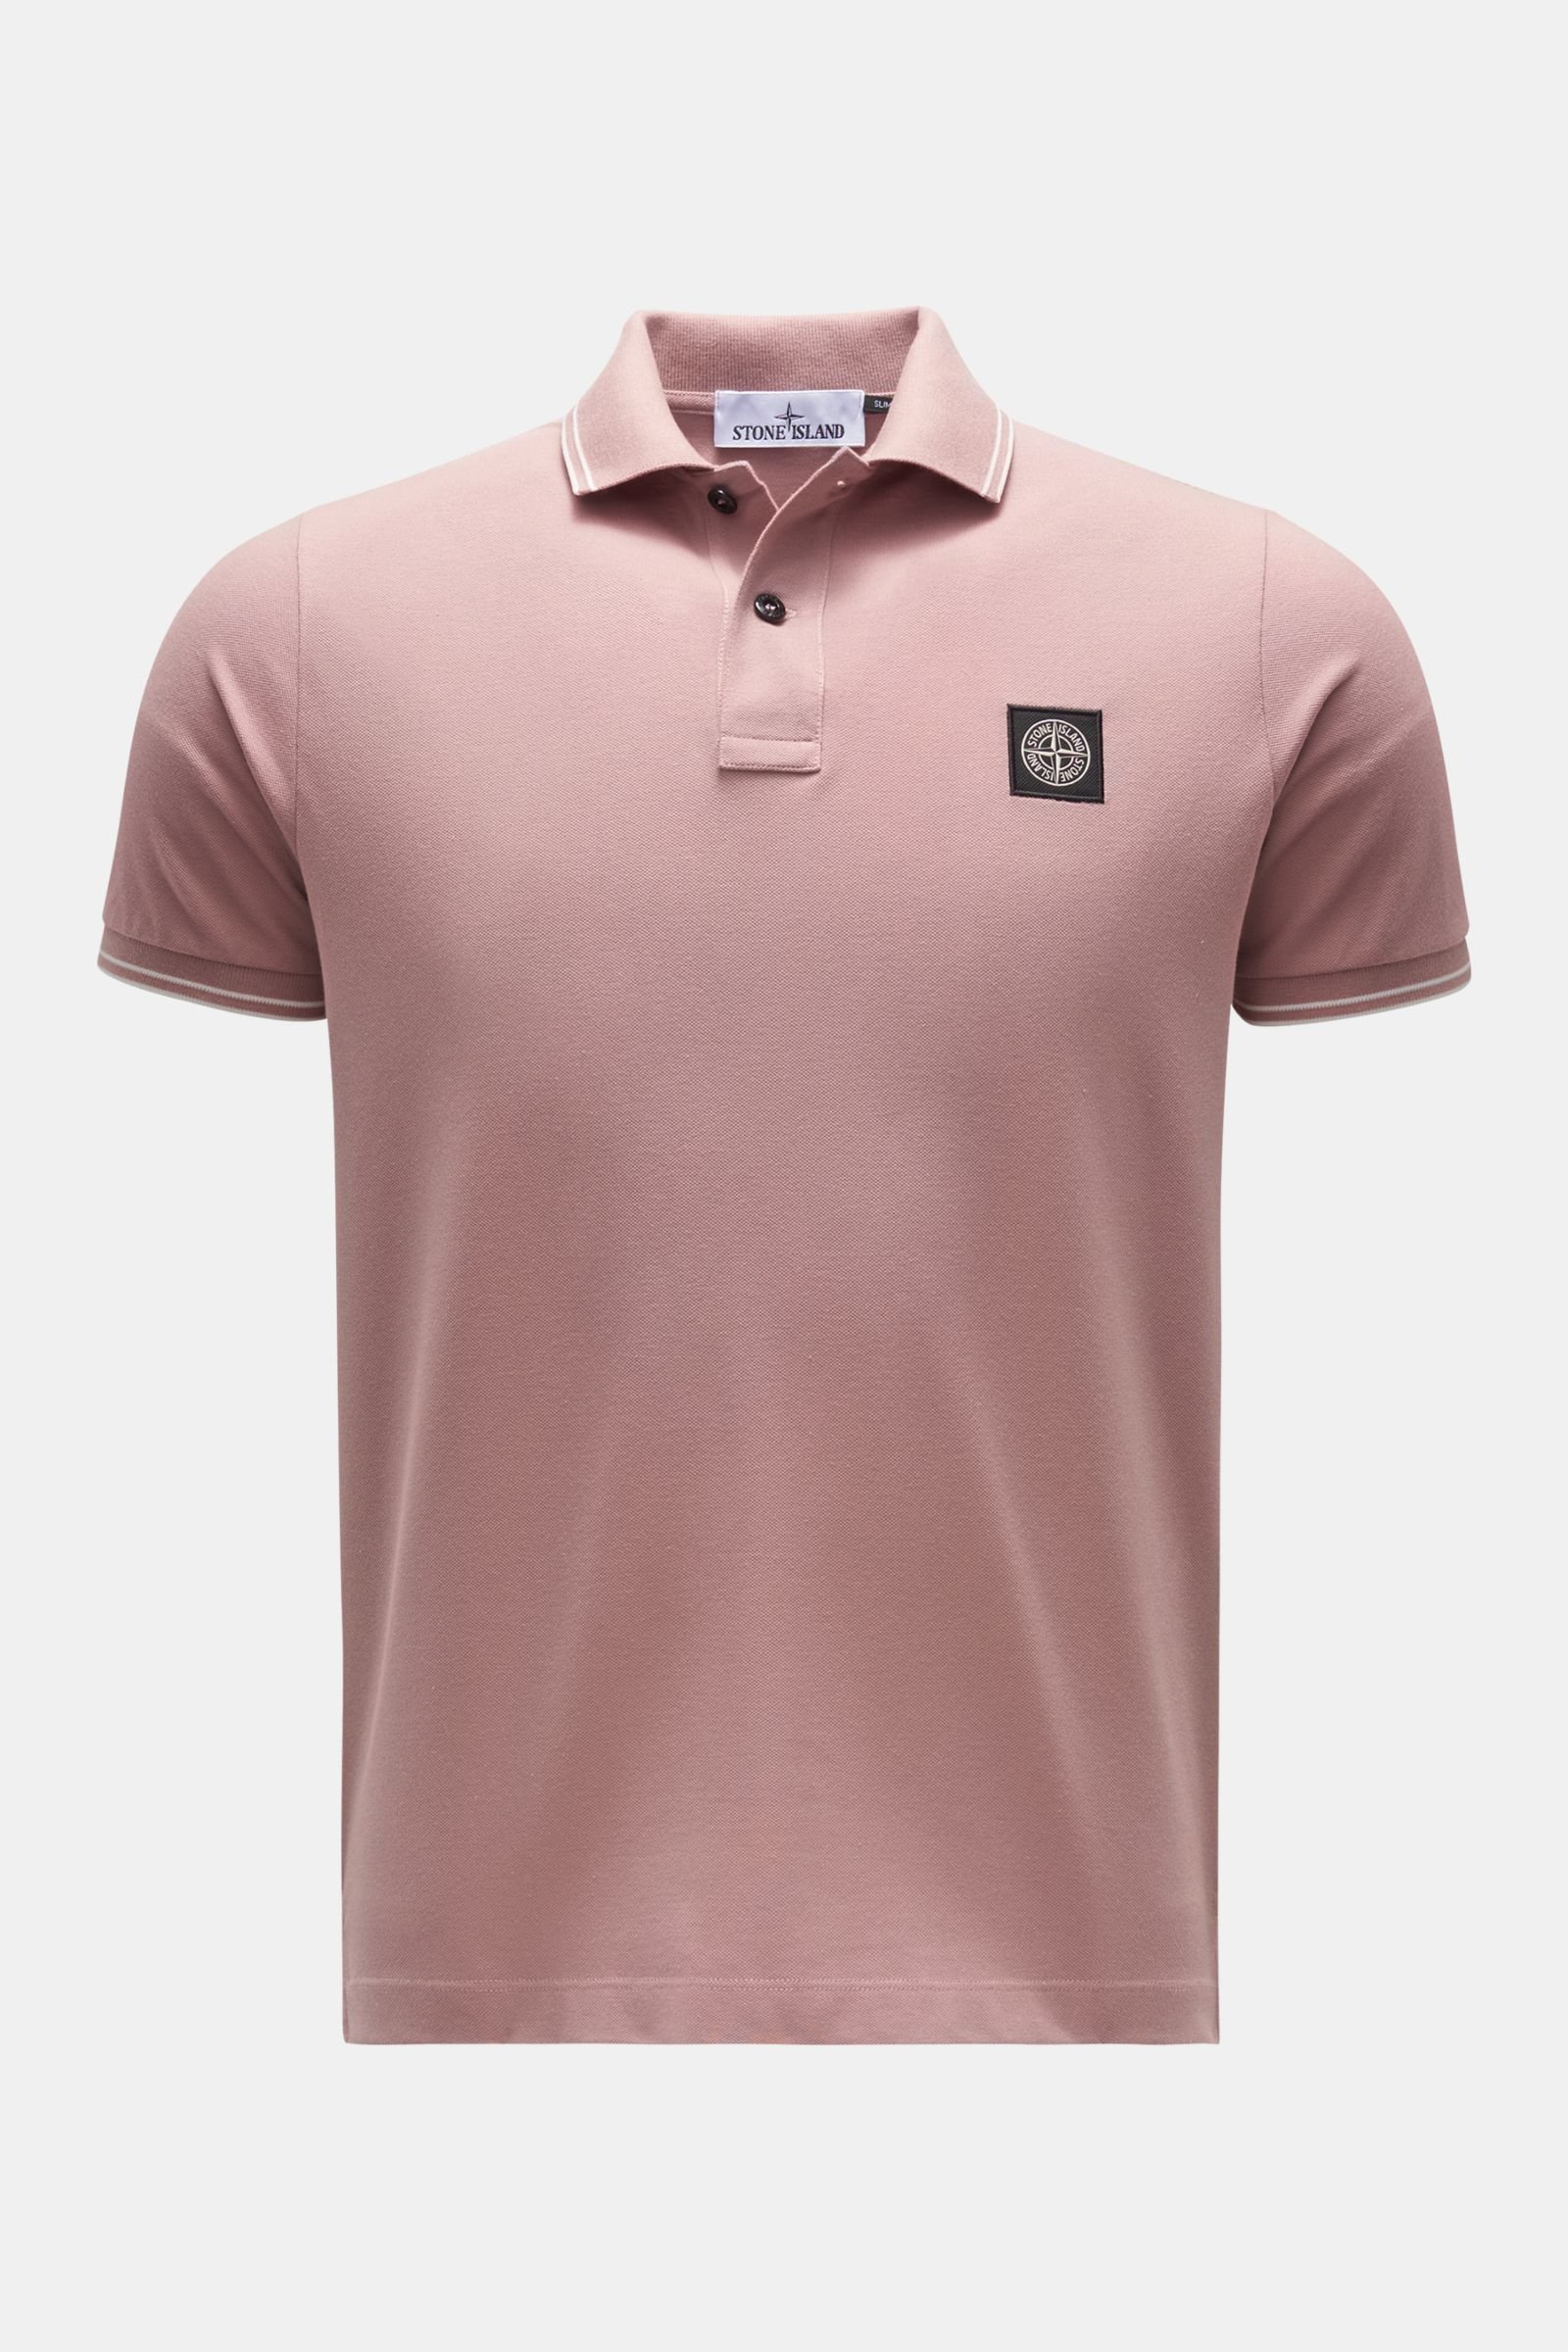 Polo shirt antique pink